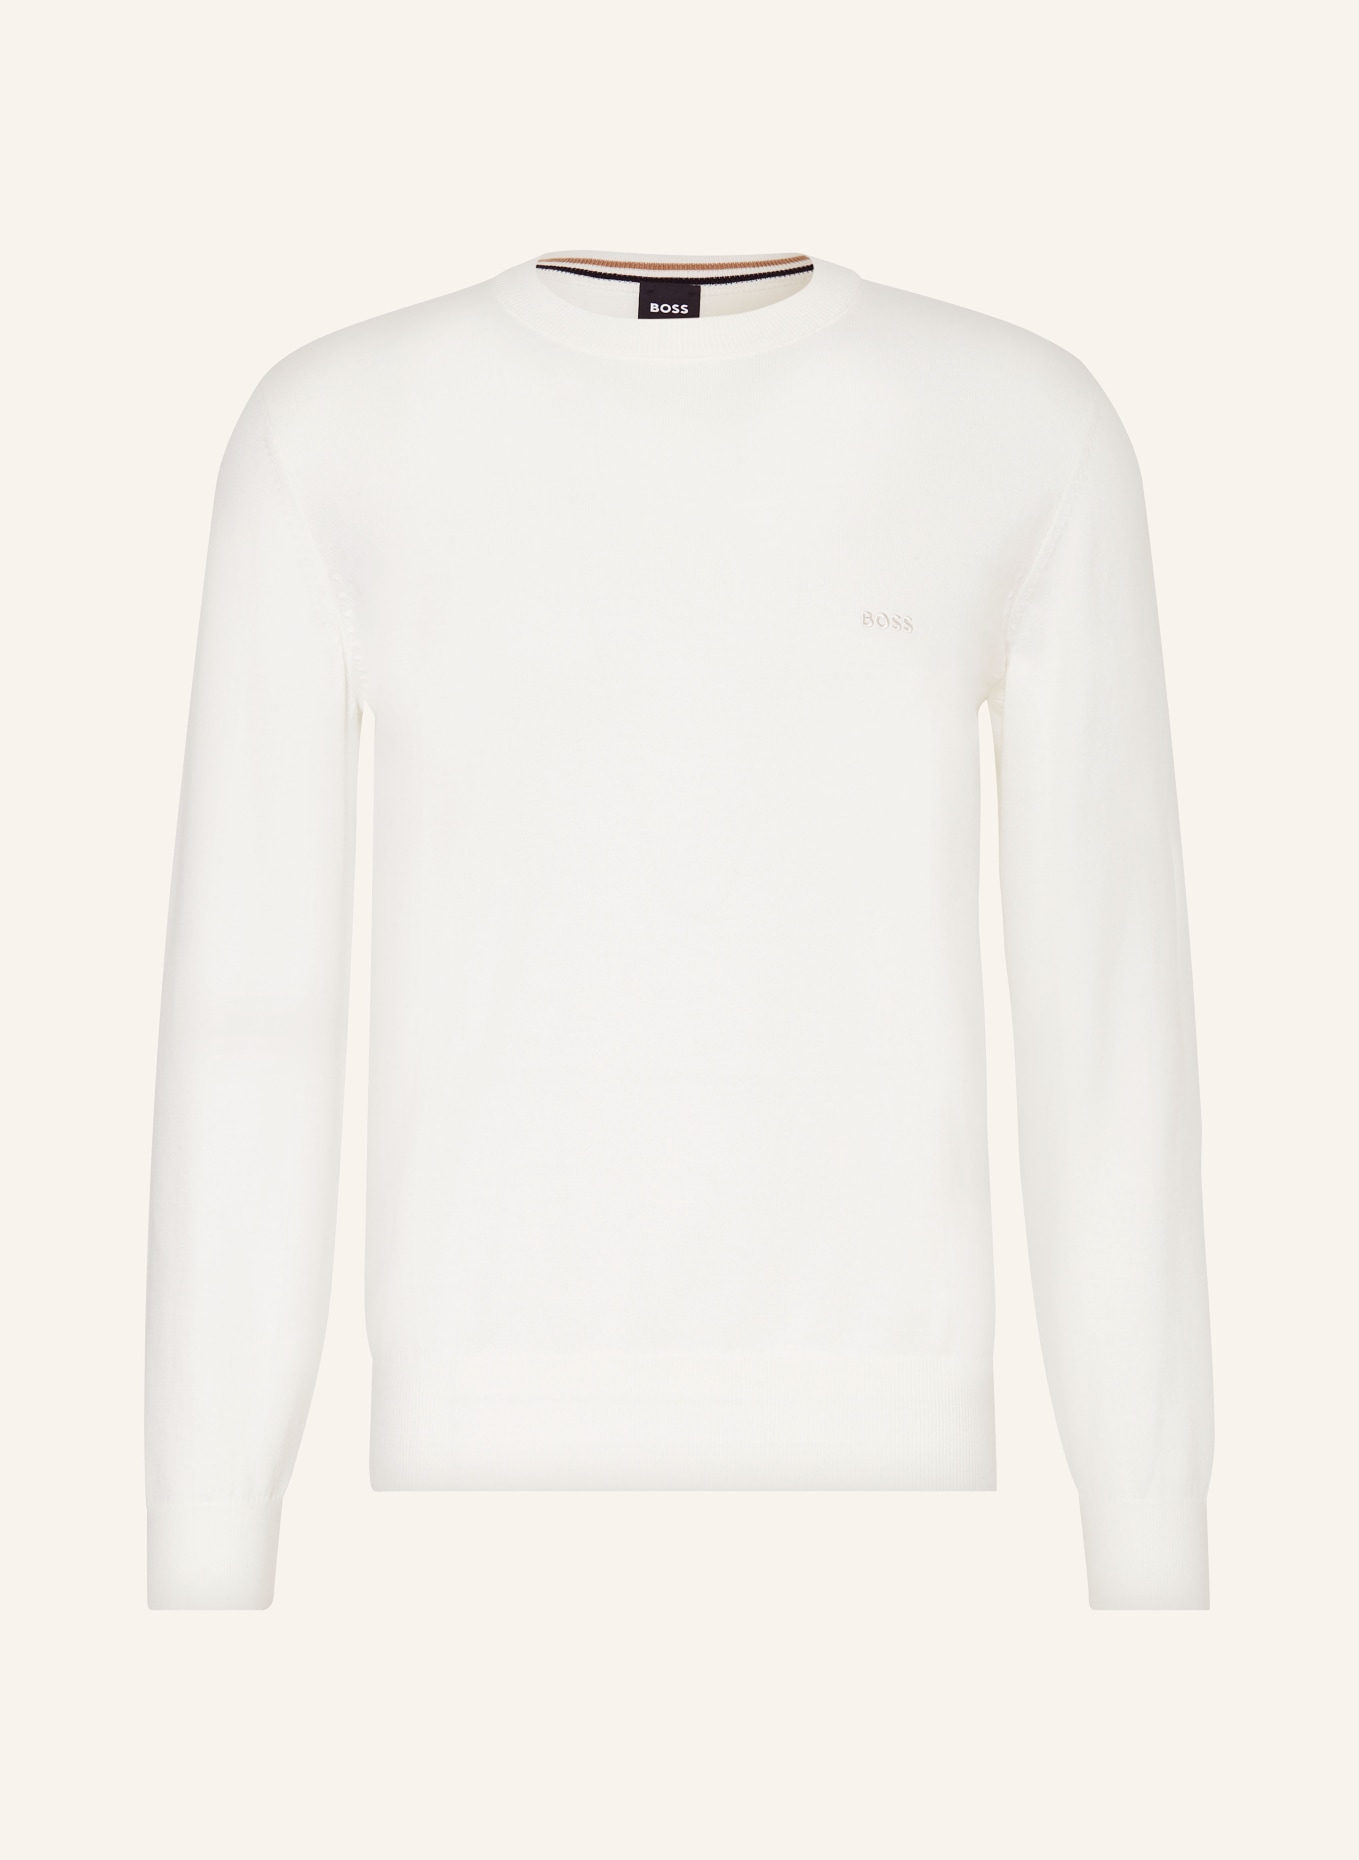 BOSS Pullover PACAS, Farbe: 100 WHITE (Bild 1)